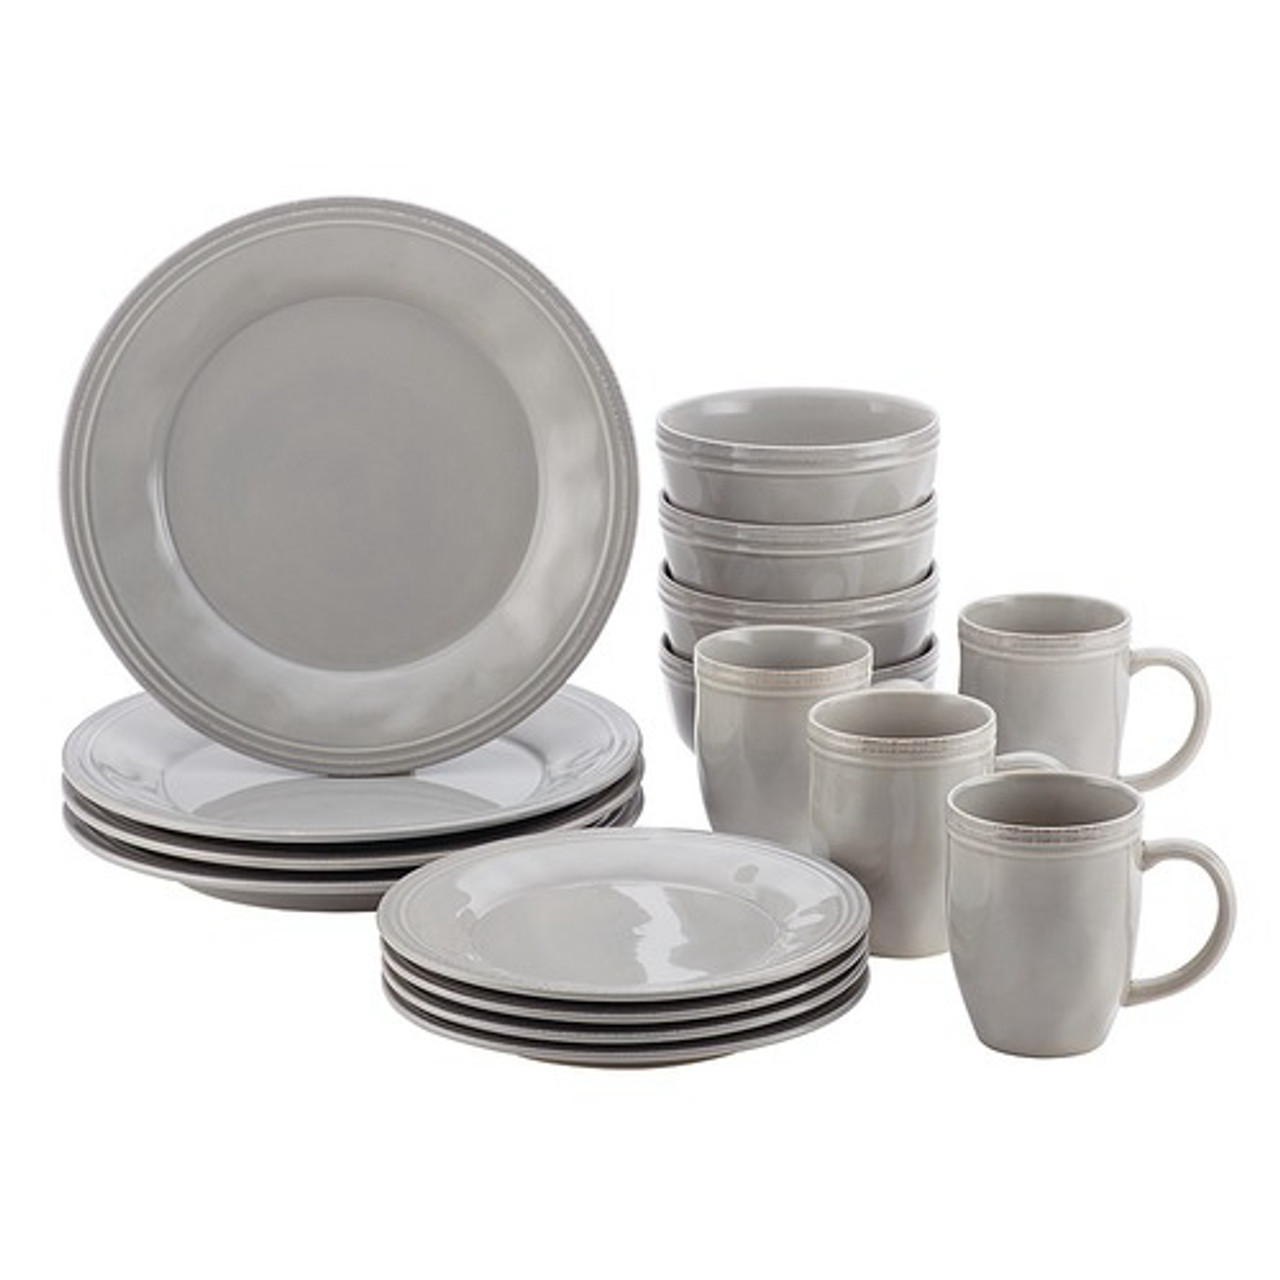 Rachael Ray Ceramic Dinnerware Set, 16-Piece, Sea Salt Gray - Sea Salt Gray